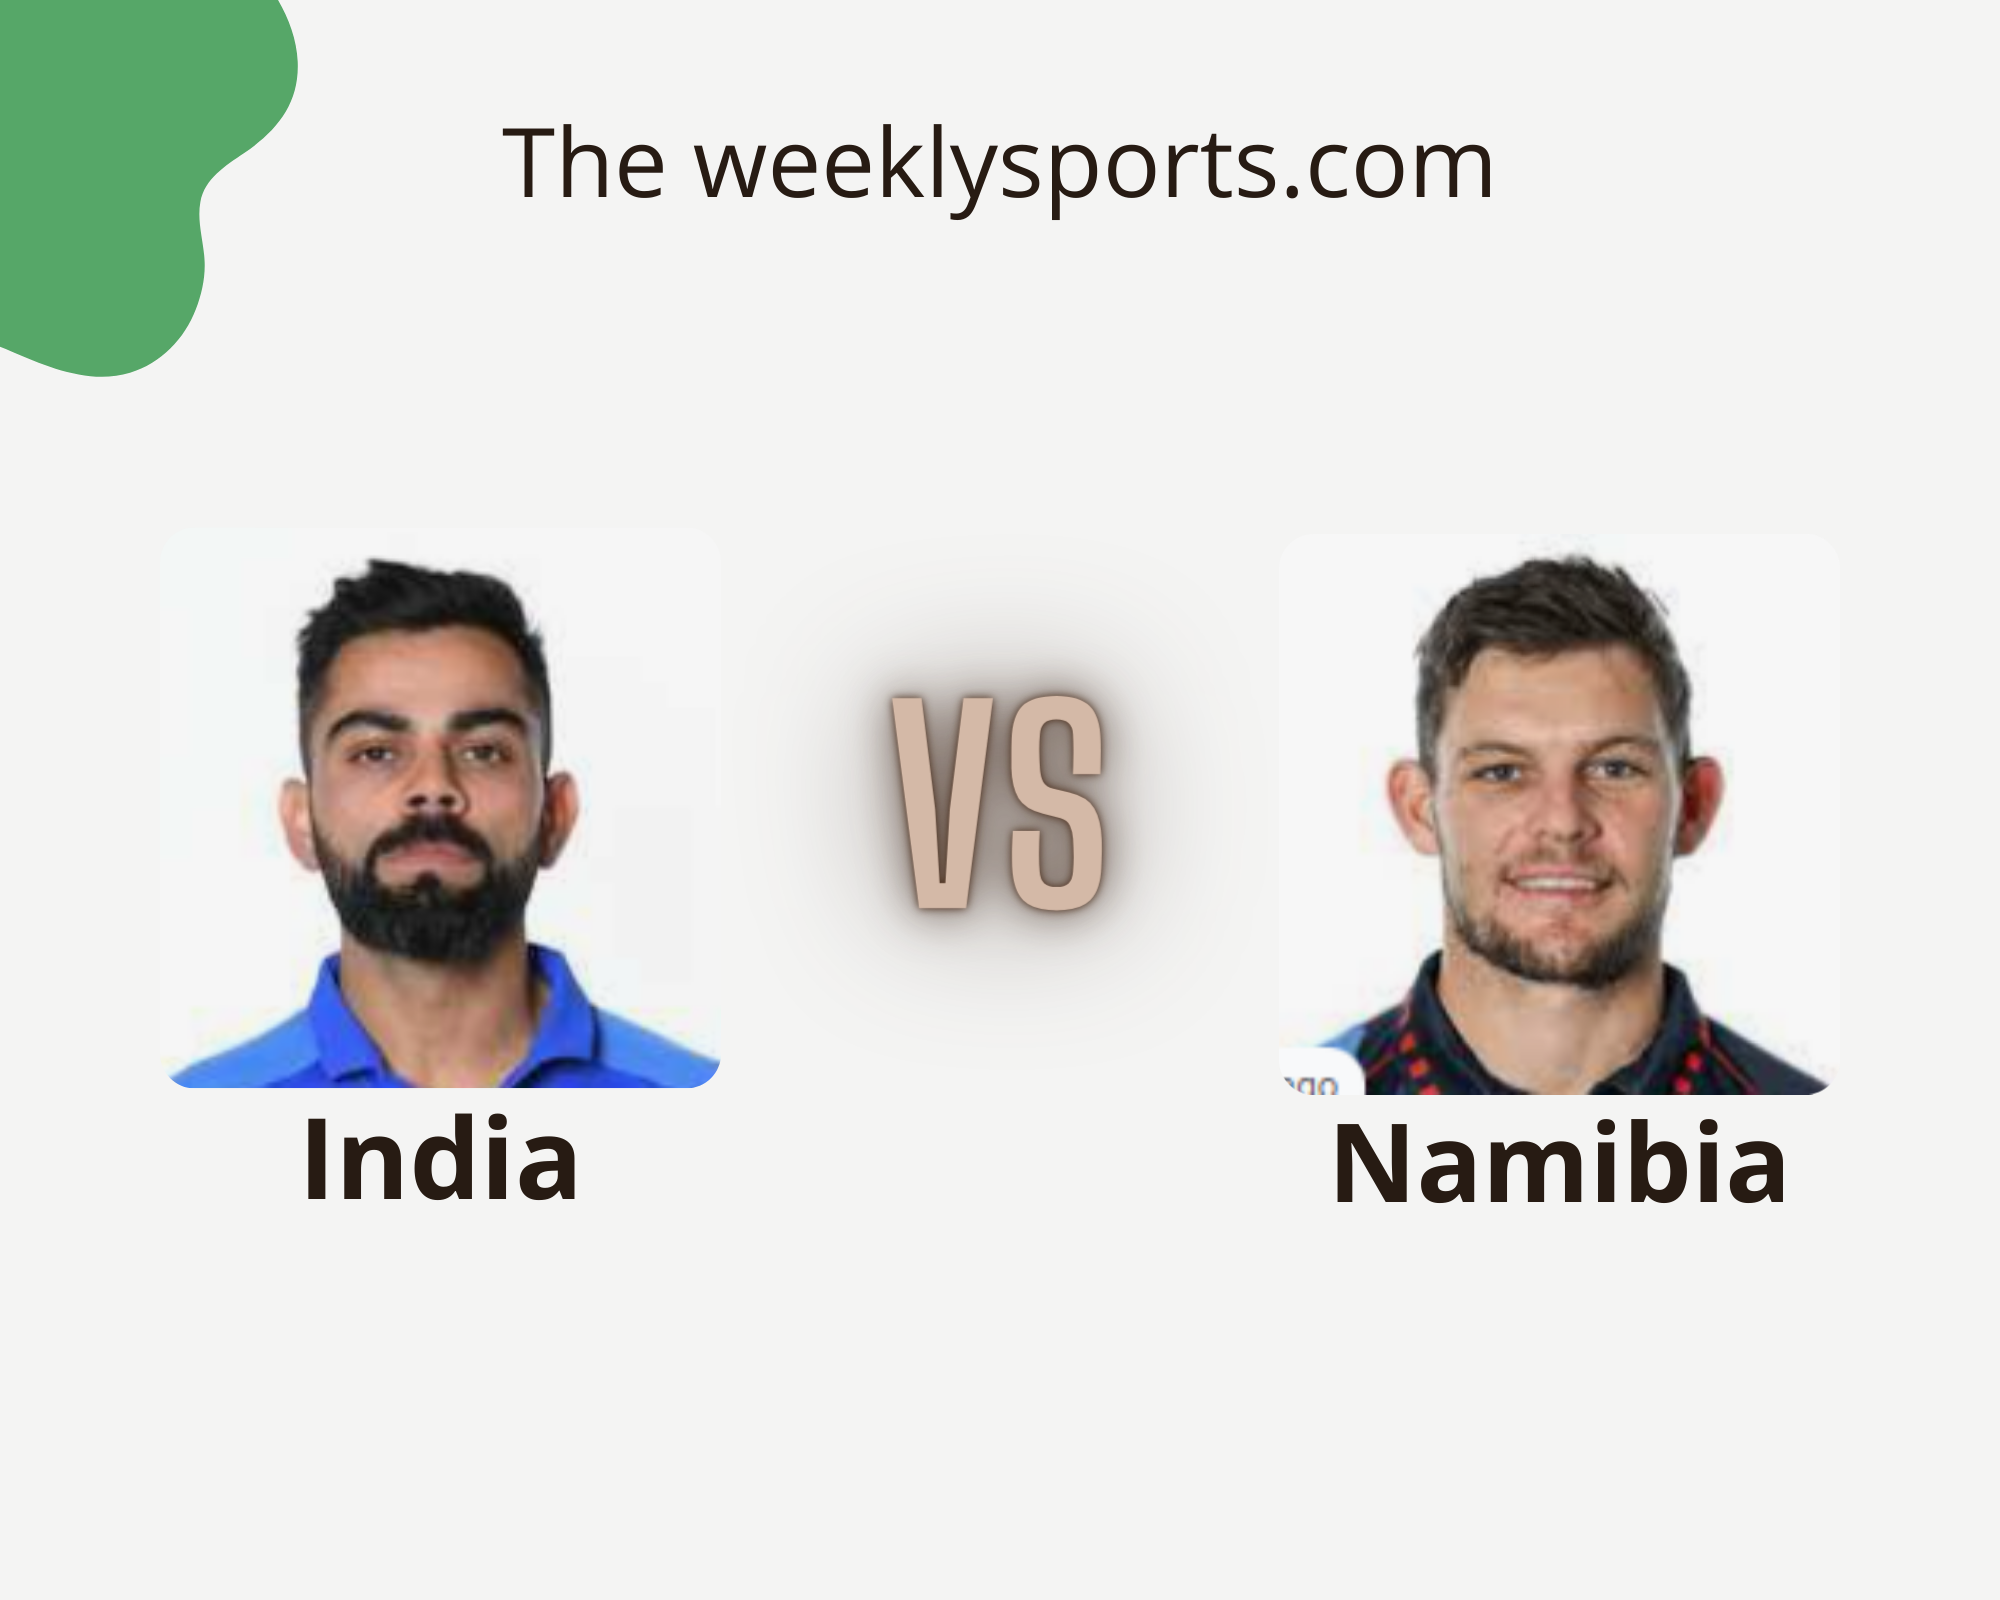 India vs. namibia